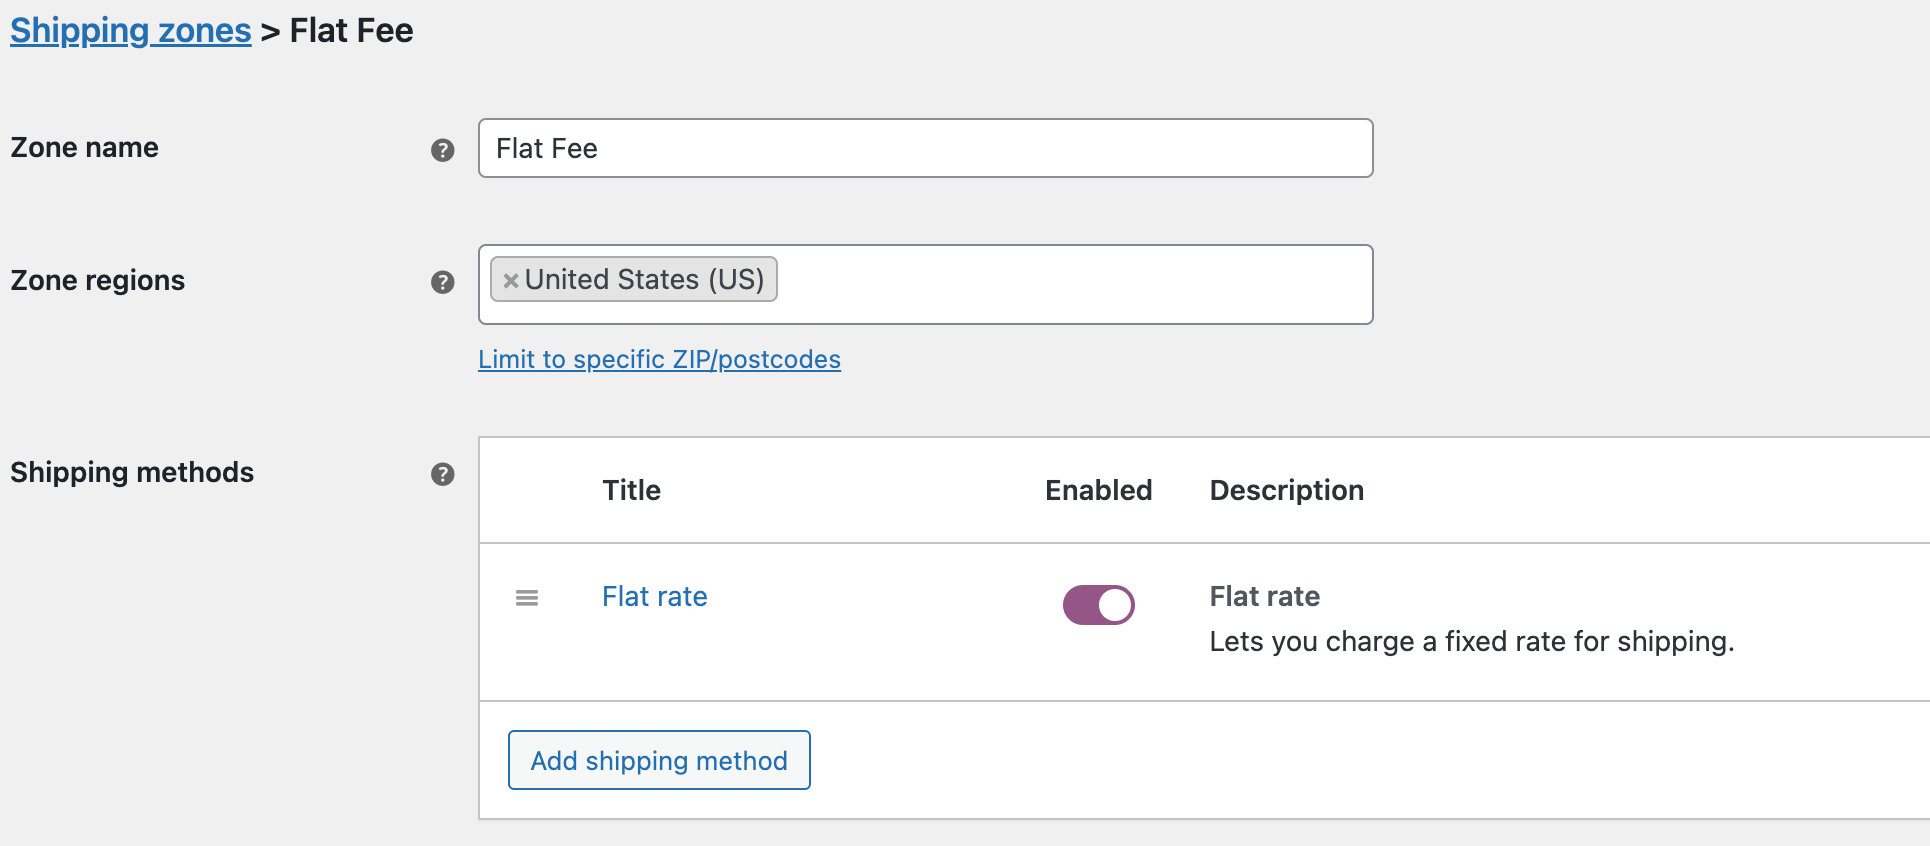 Add shipping method to add ticket fees